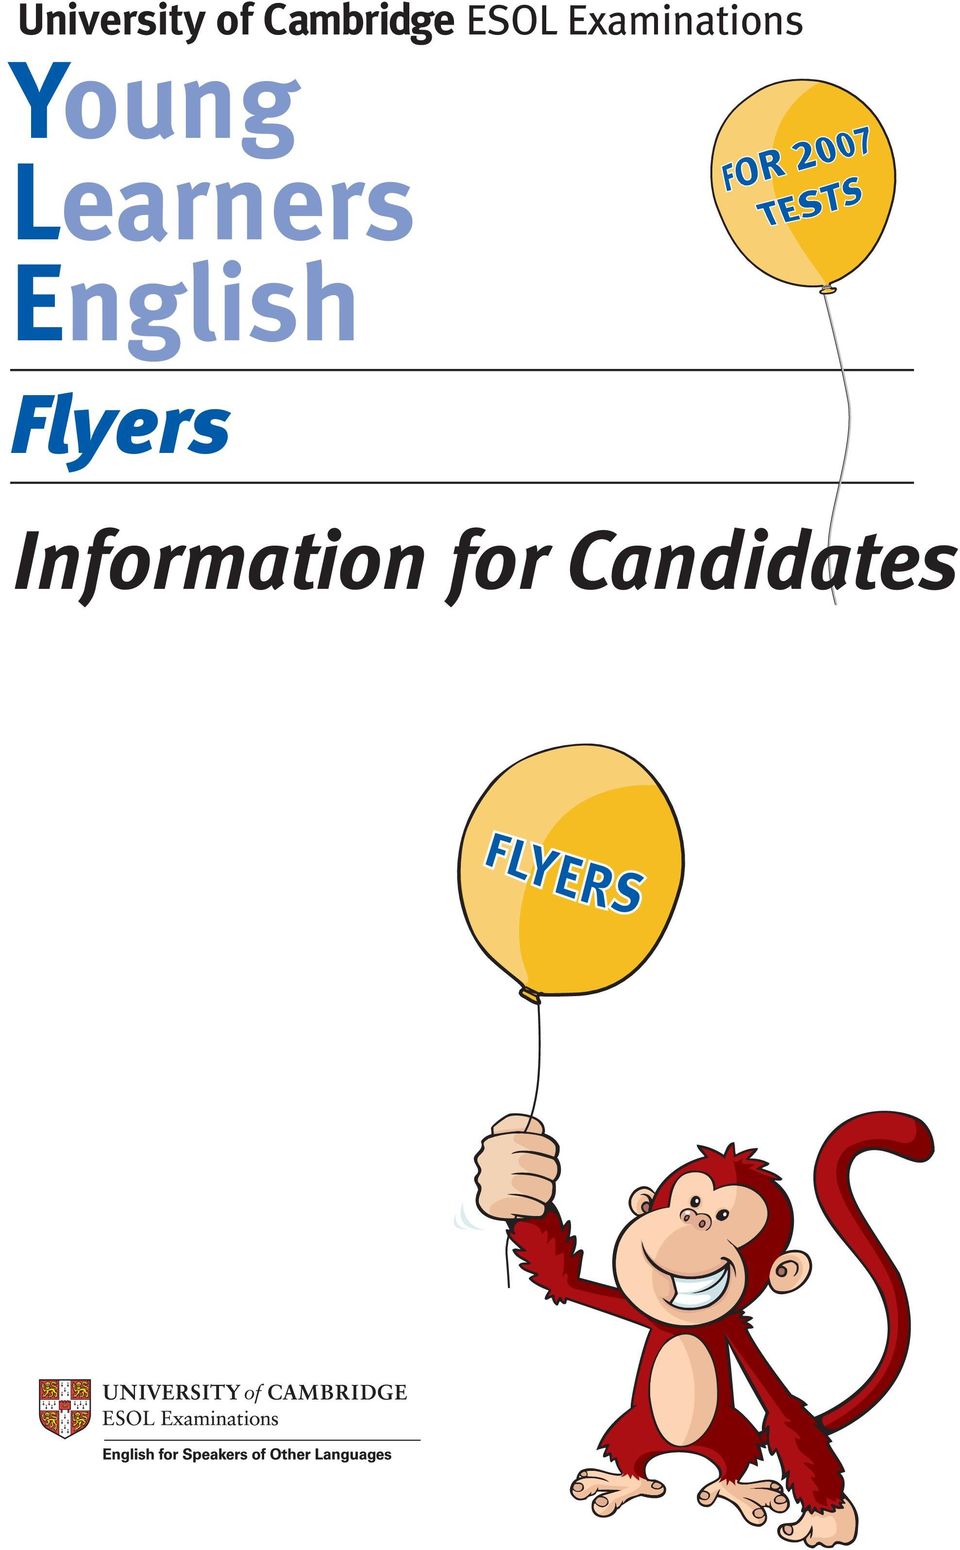 Learners English Flyers